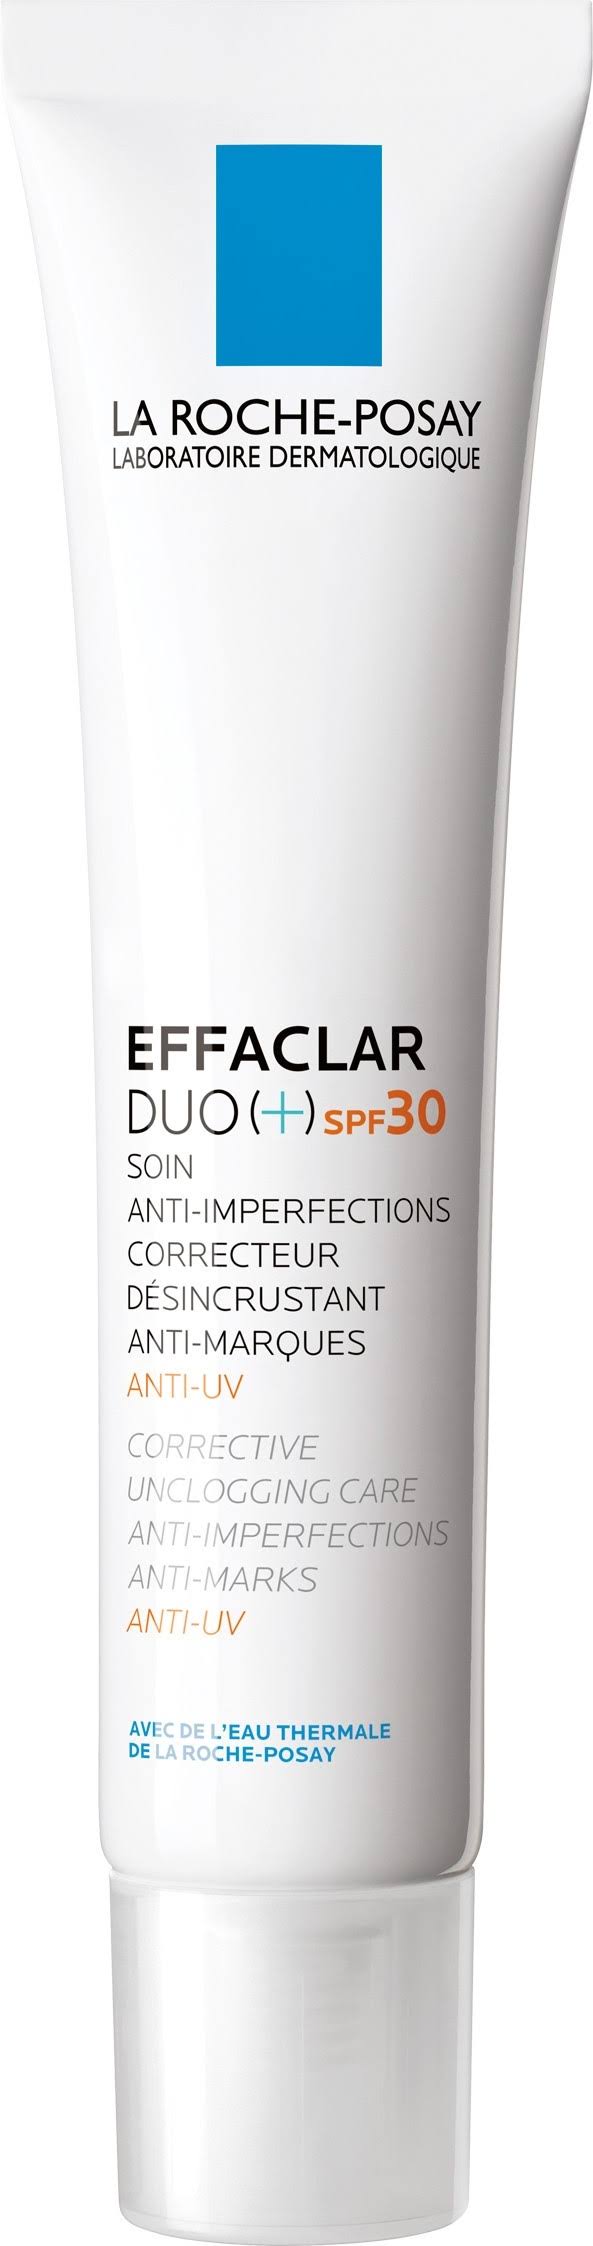 La Roche-Posay Effaclar Duo Plus Anti Blemish Treatment - Spf 30, 40ml